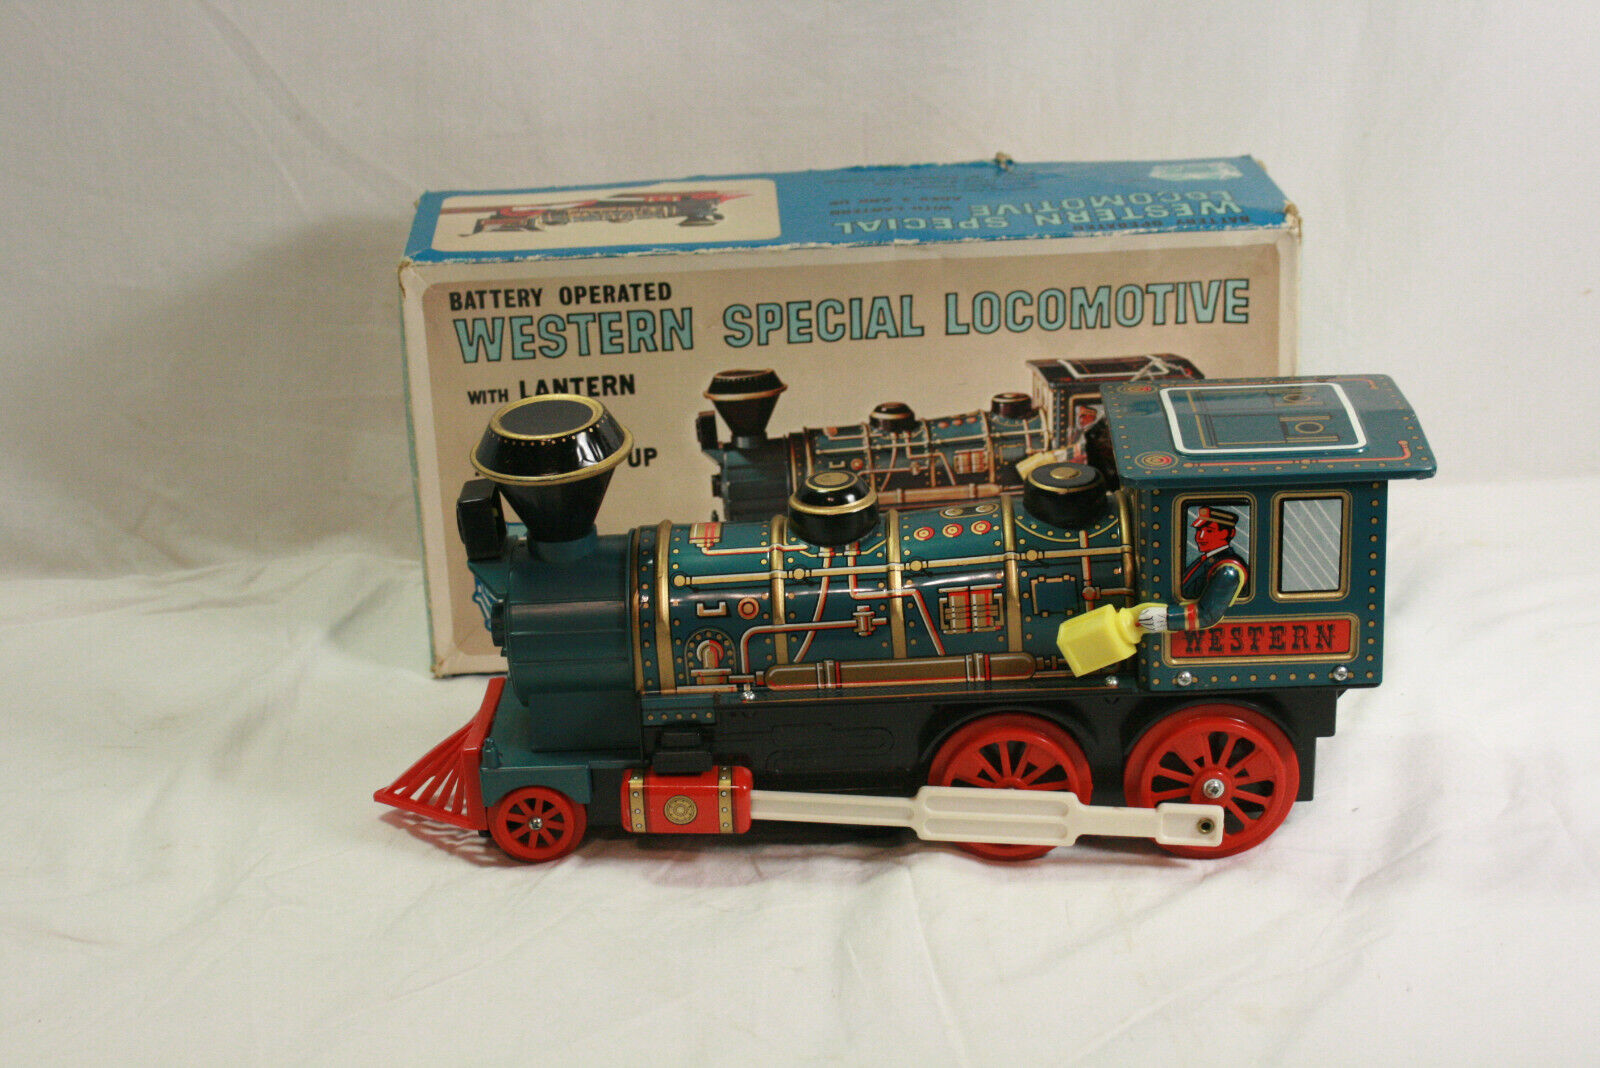 Sears Big Toy Box Batttery Tin Toy Western Special Locomotive w/ Lantern AS IS